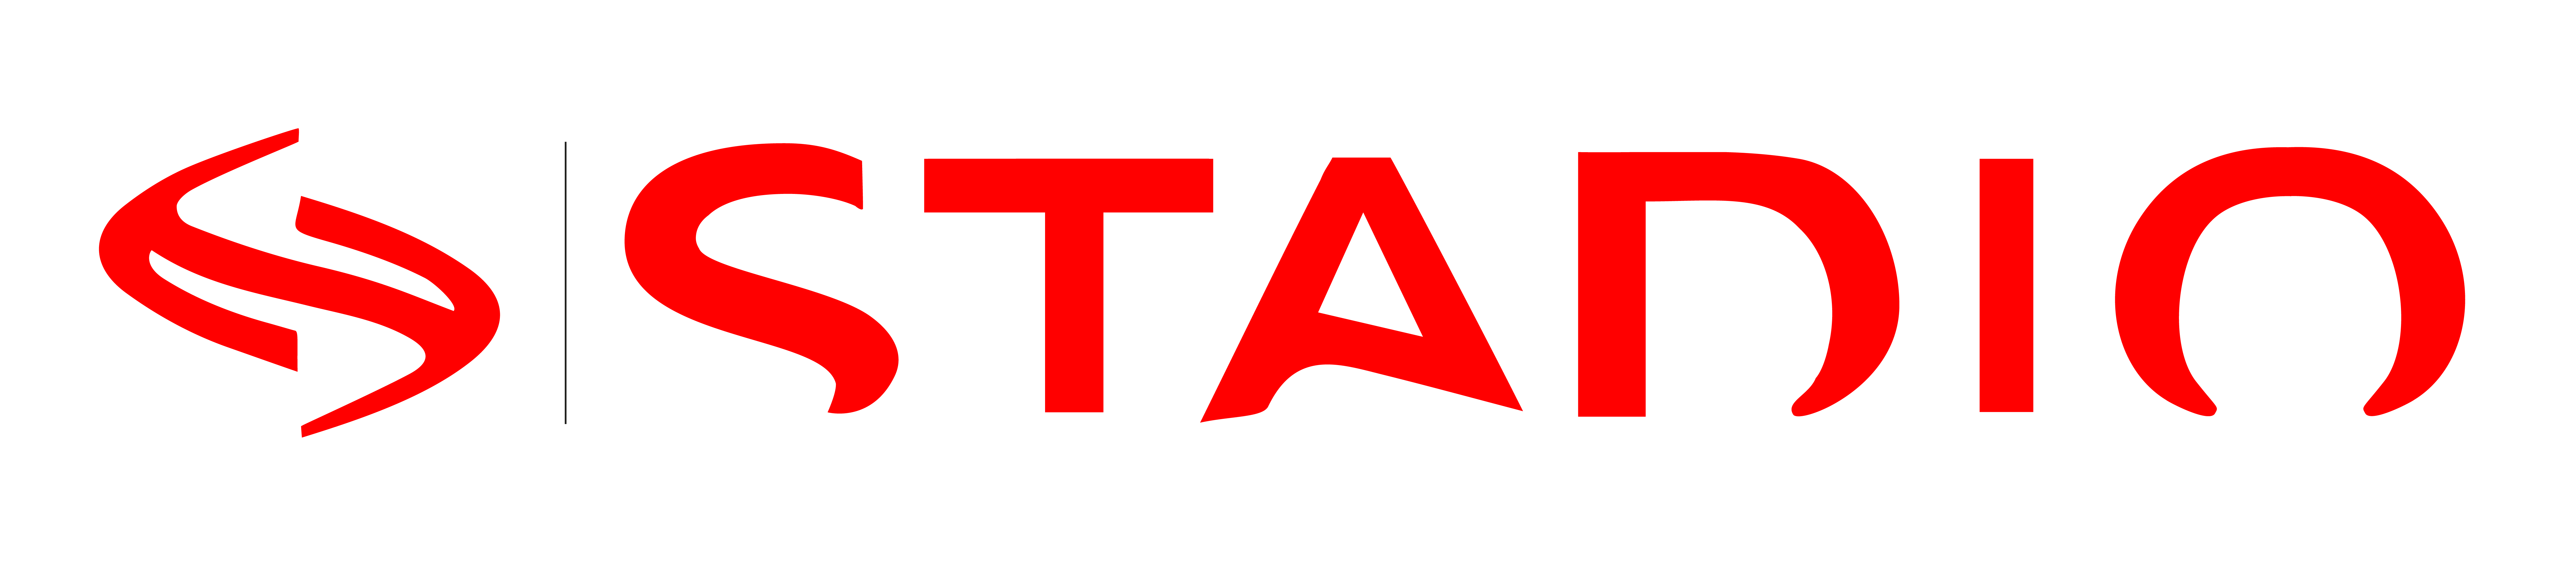 Logo Stadio2-01